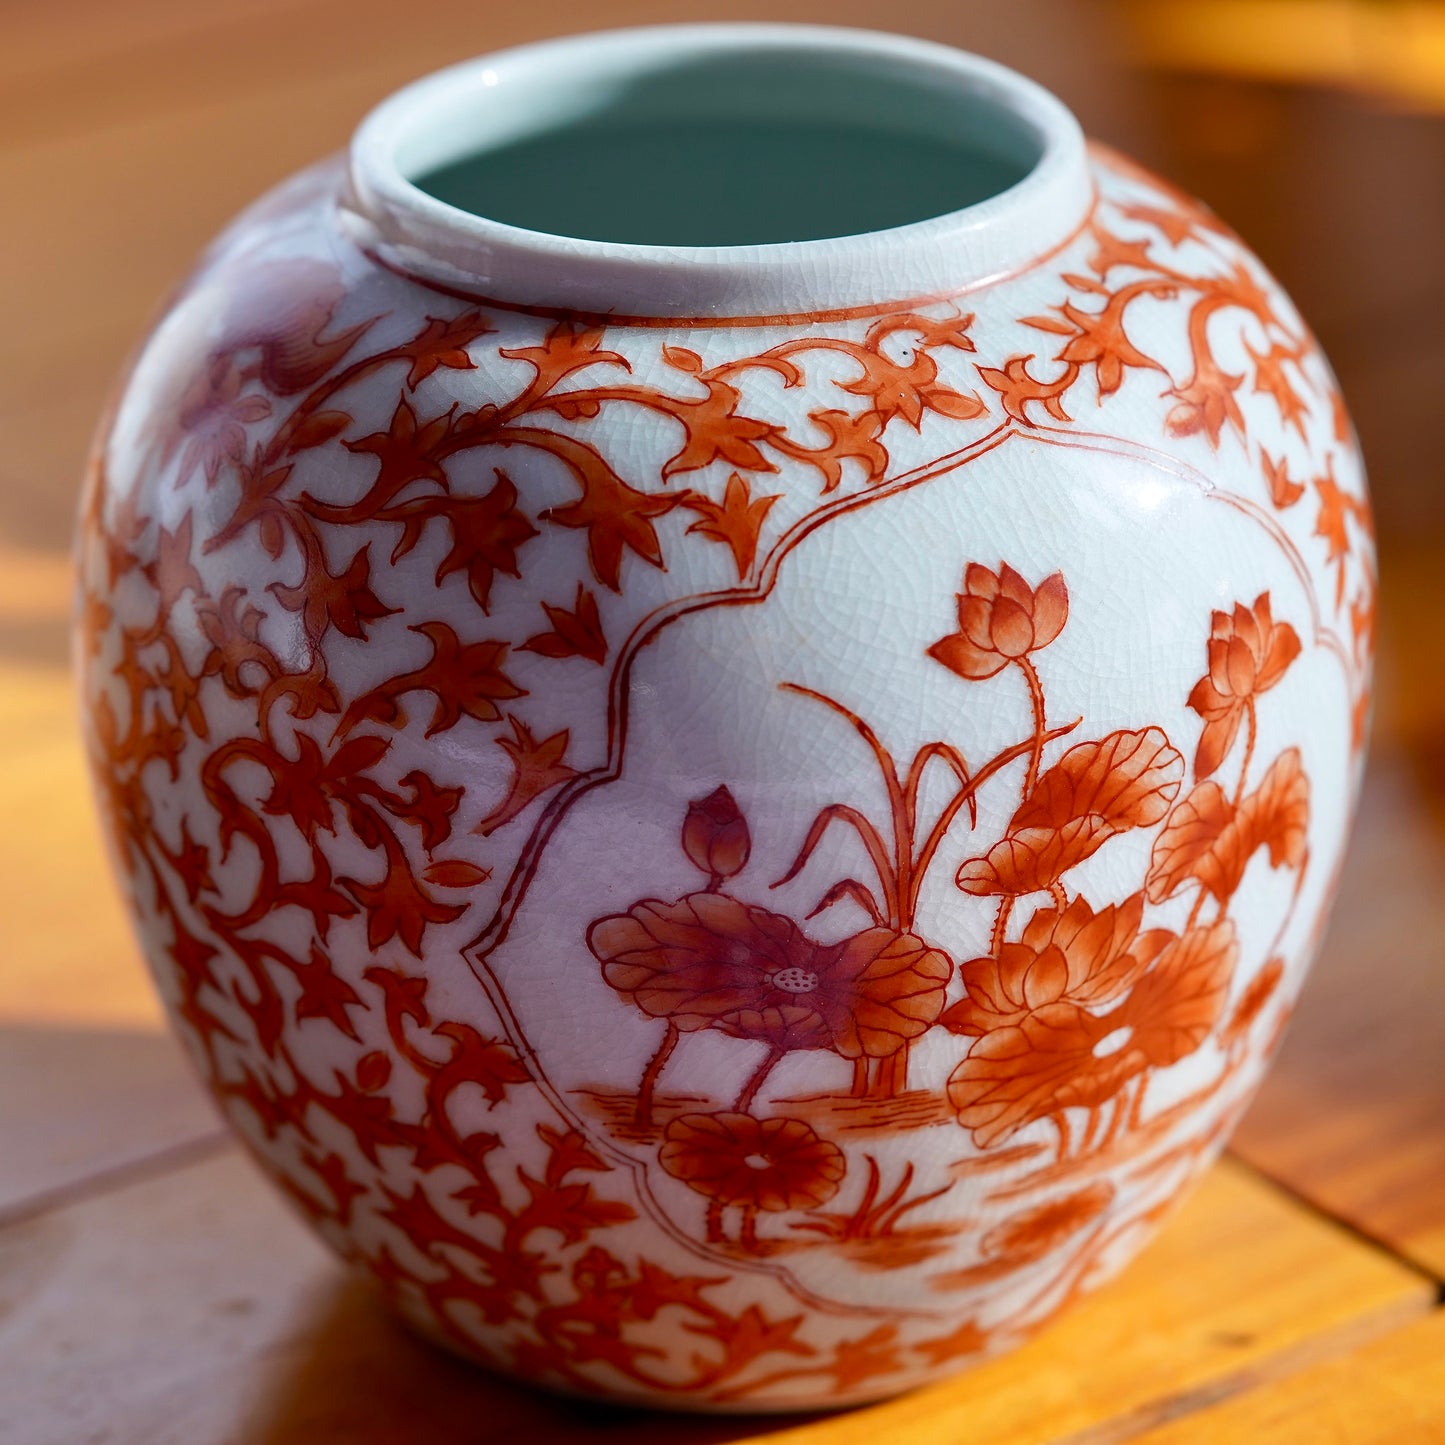 Vintage white and orange handpainted Japanese porcelain vase with flowers, displayed on light wood floor.